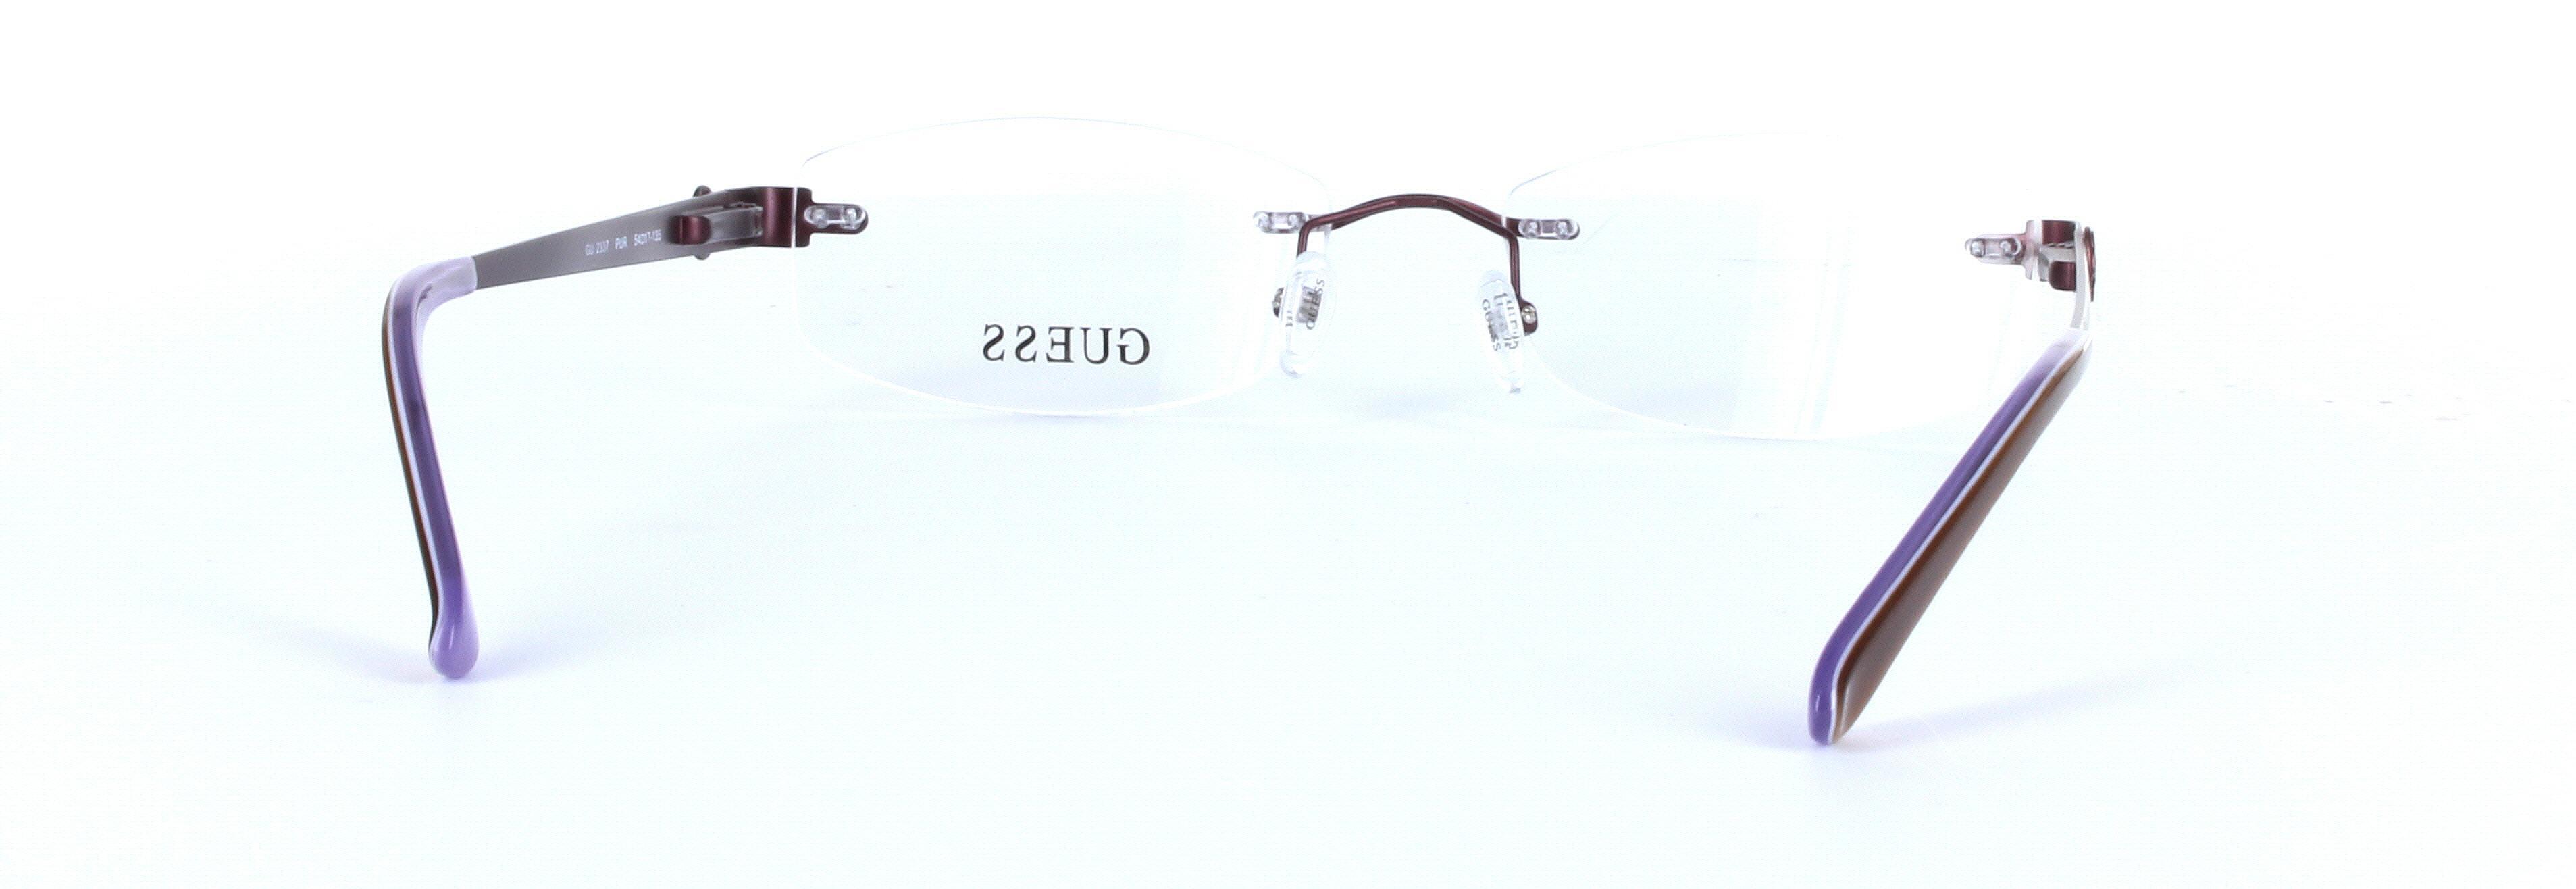 GUESS (GU2337-PUR) Purple Rimless Oval Rectangular Metal Glasses - Image View 3